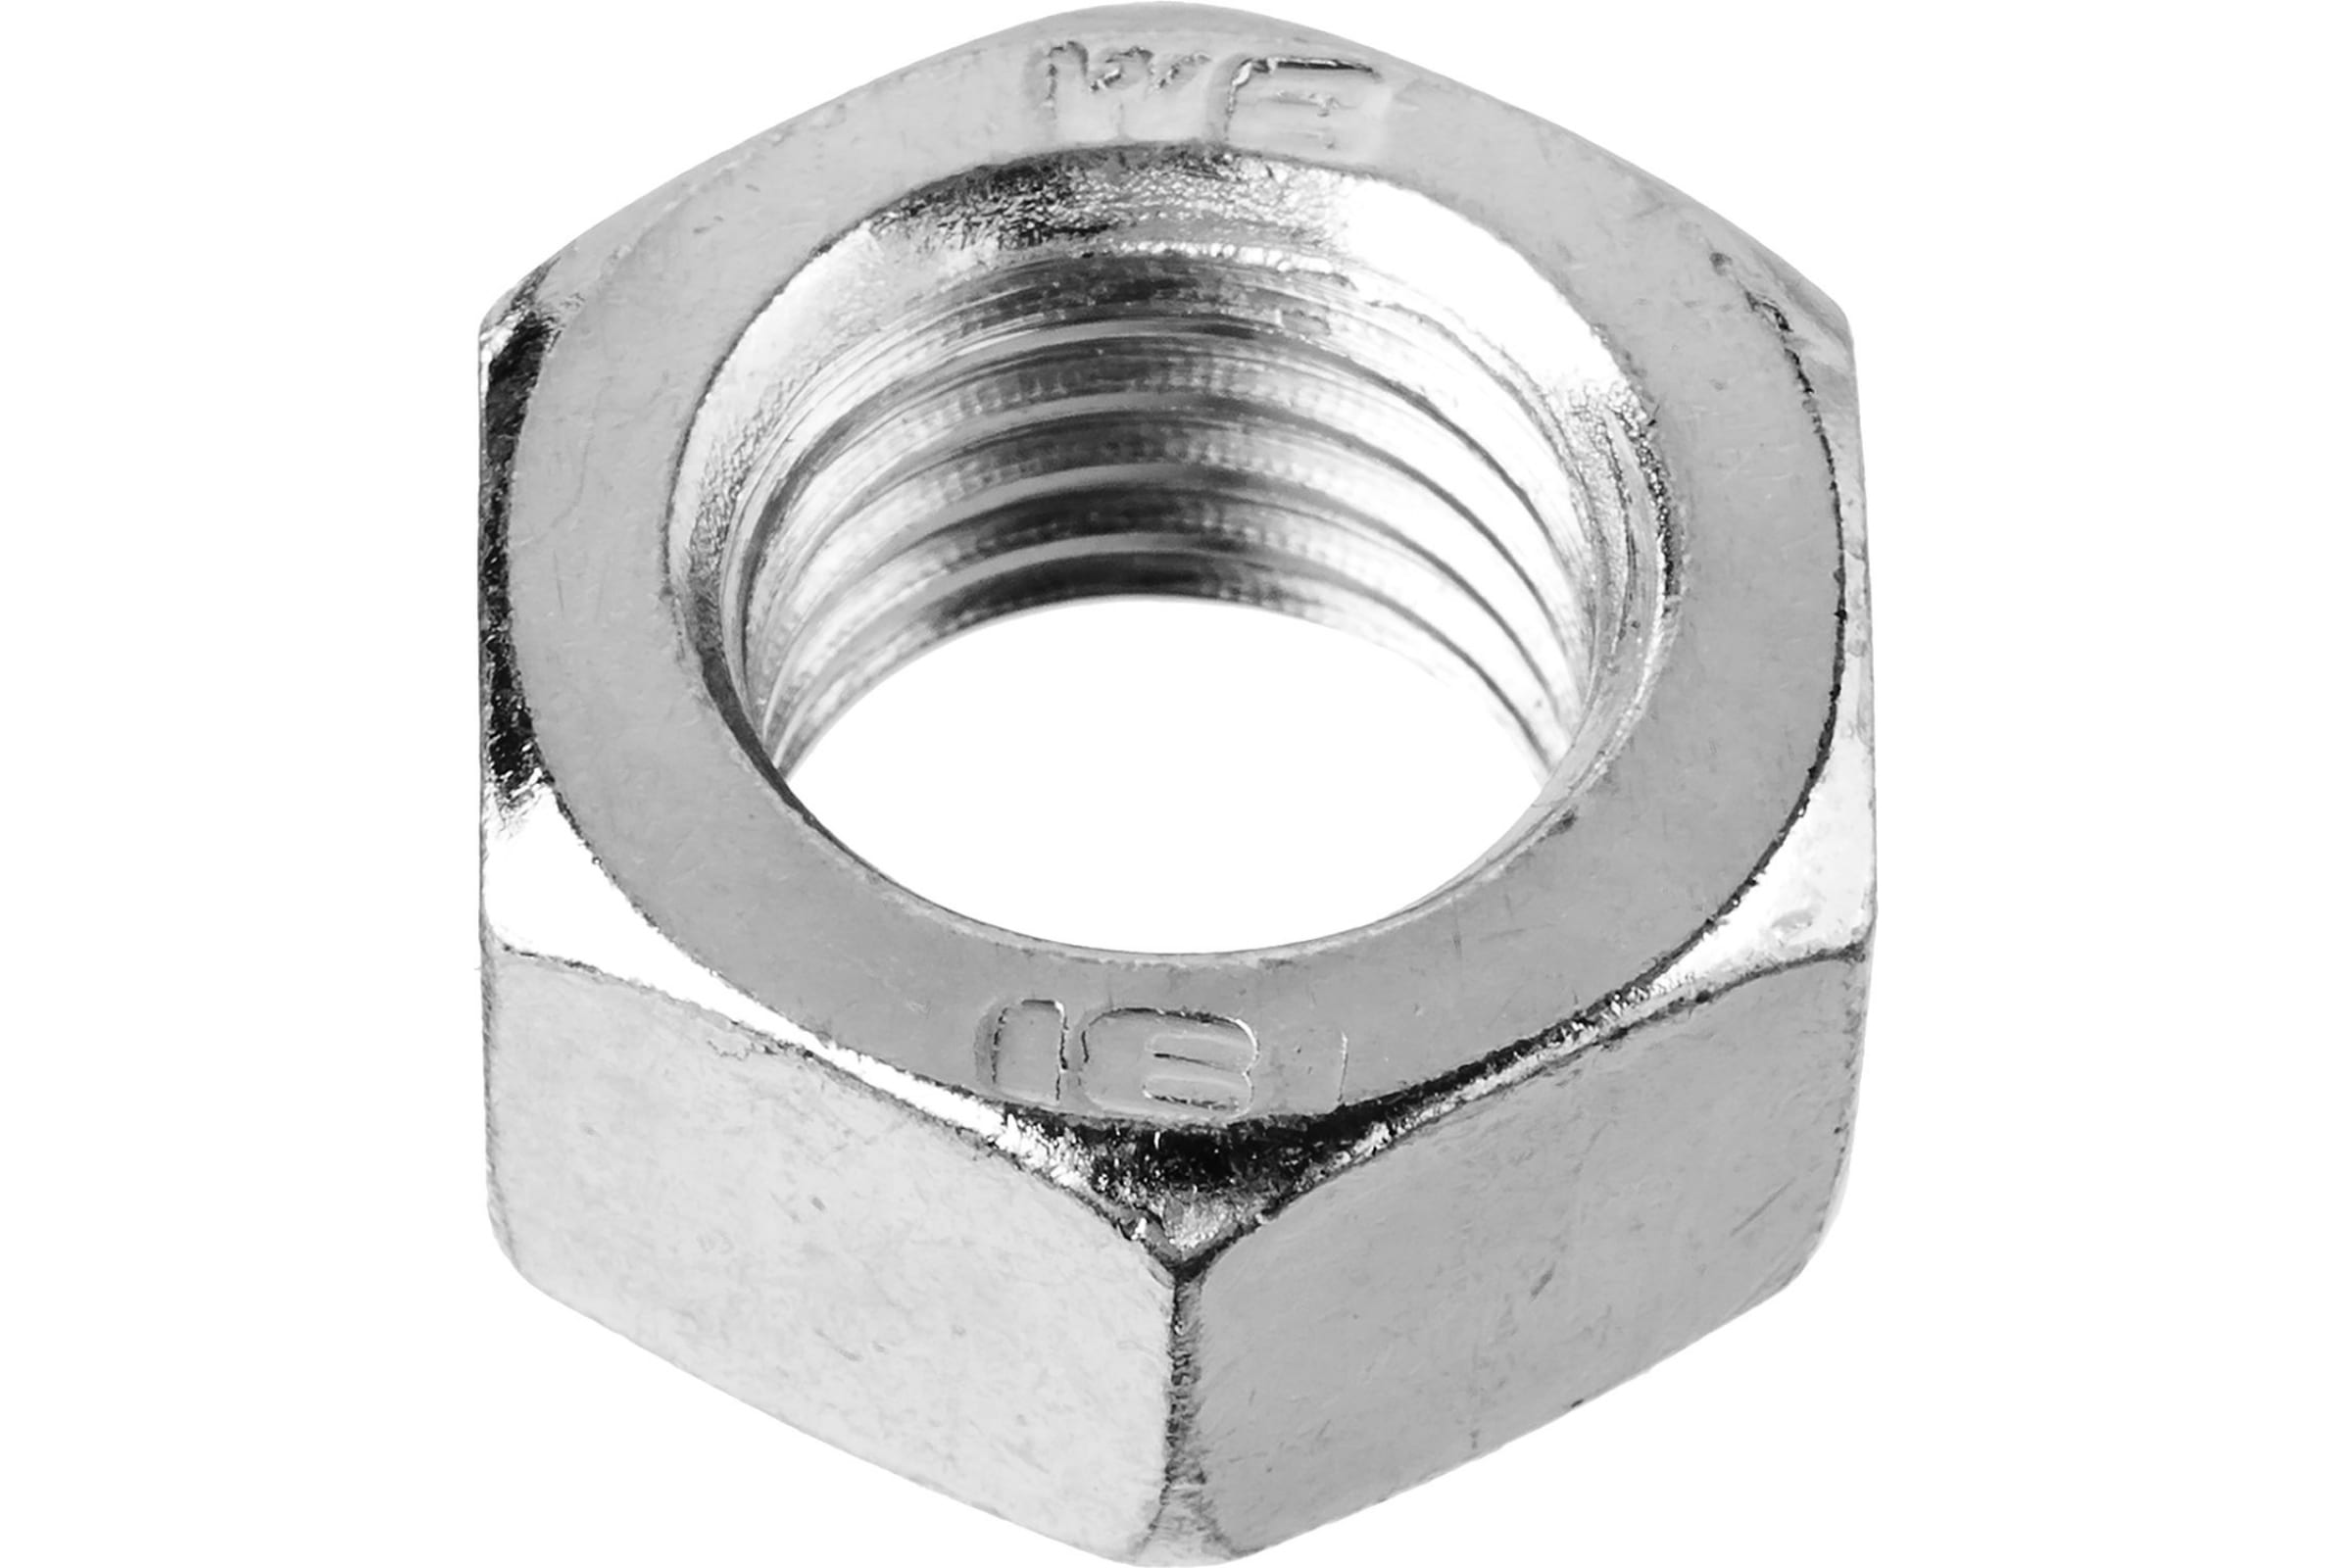 Гайка Зубр, М8, 934 DIN, оцинкованная сталь, 10 шт., фасовка (303556-08)